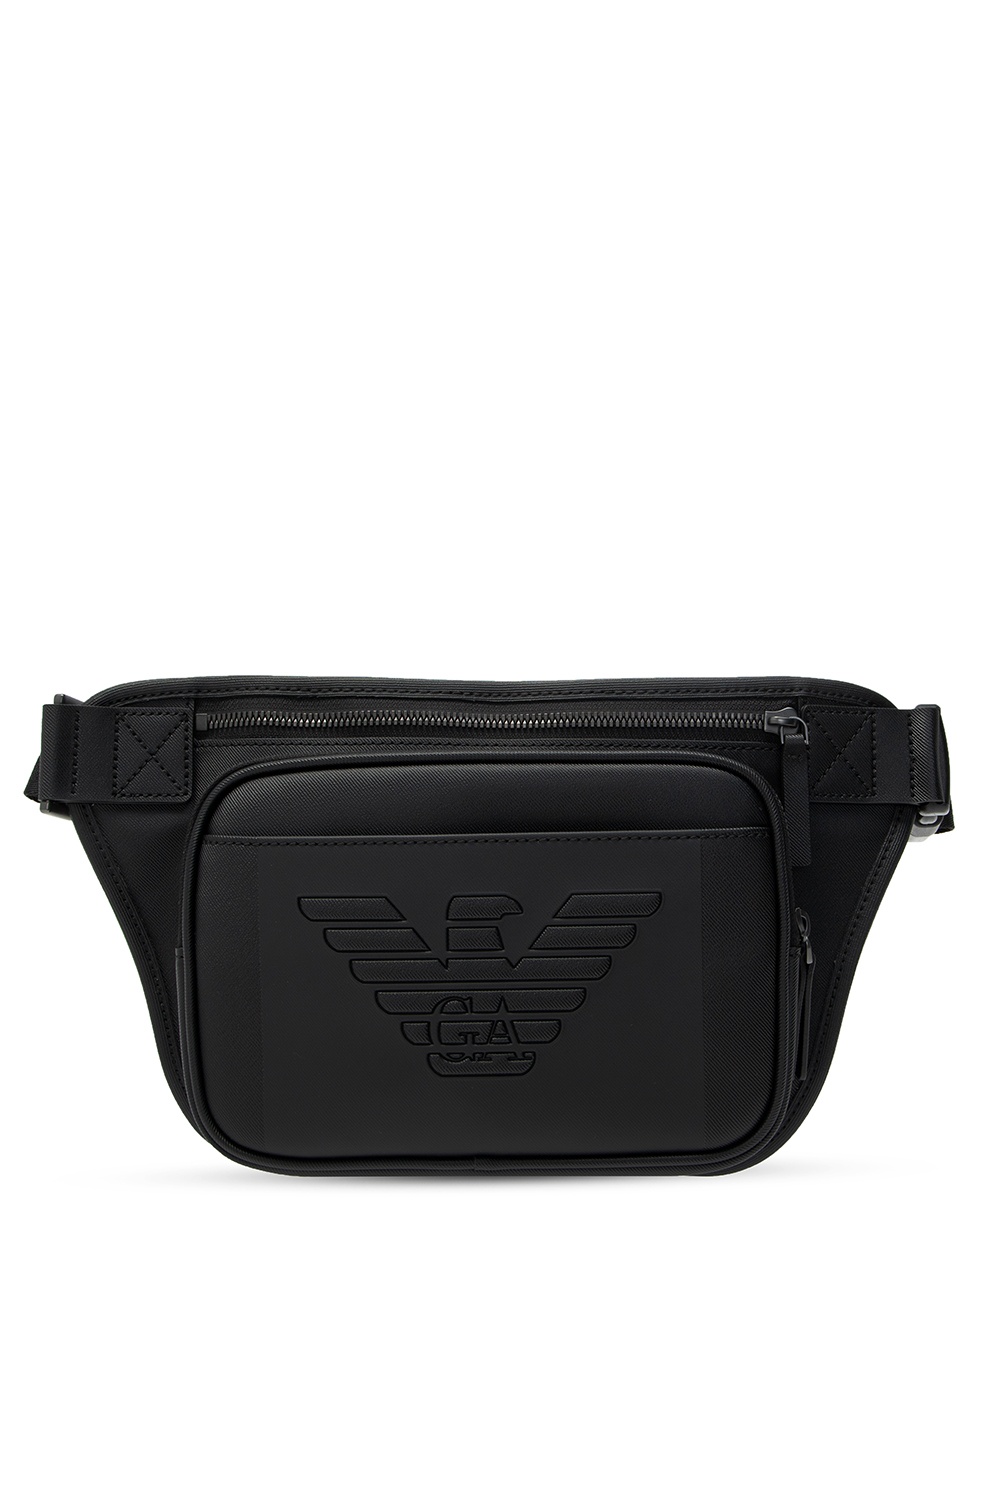 Emporio Armani Men's Belt Bag - Black - Belt Bags